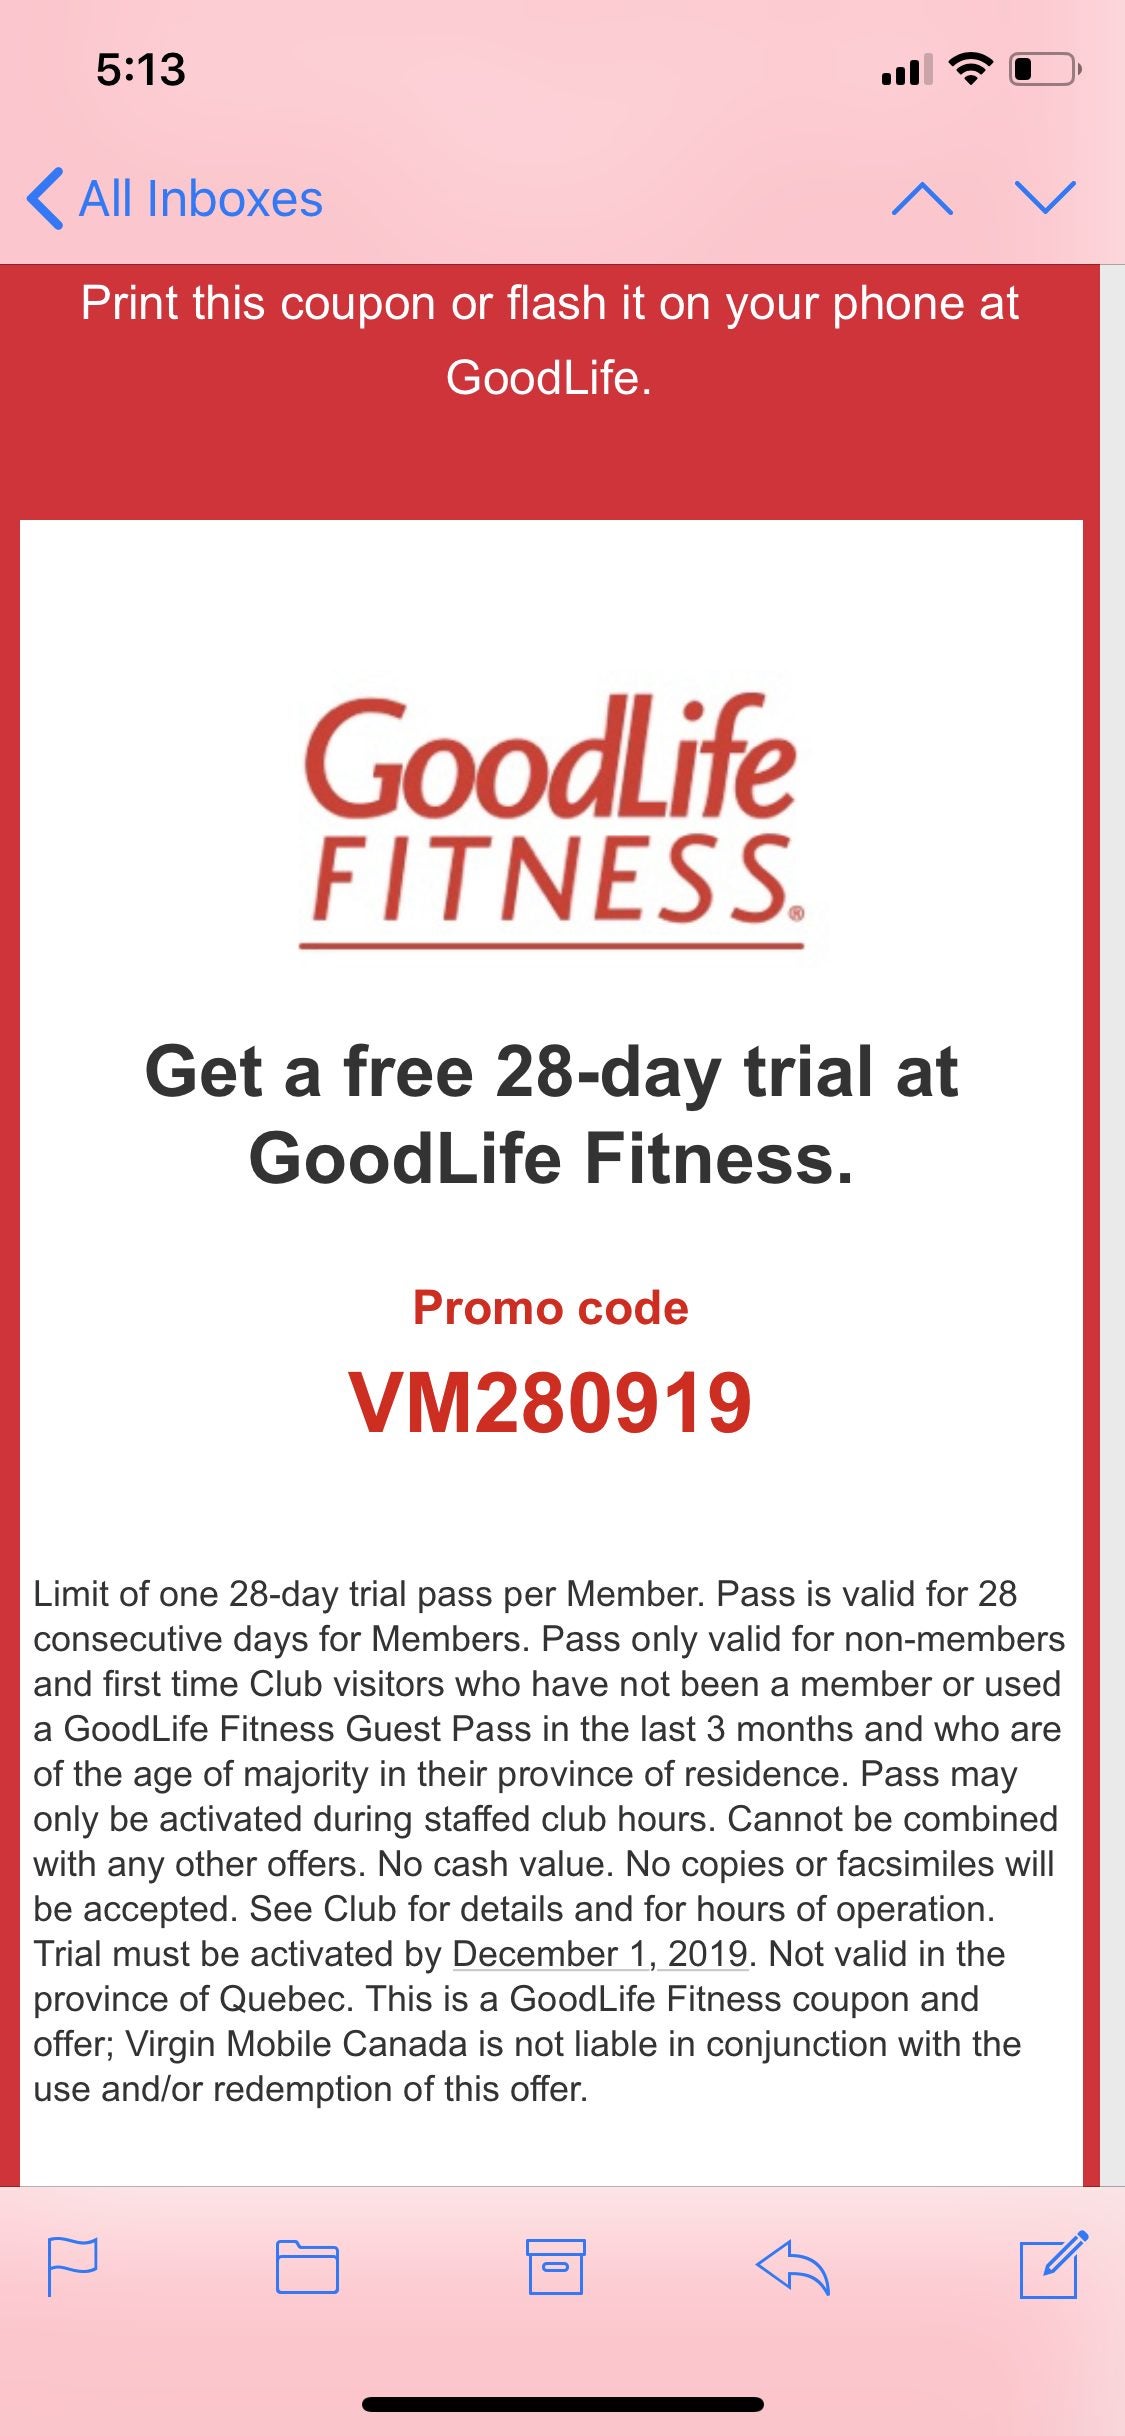 Goodlife Fitness Membership Fee - Page 28 - RedFlagDeals.com Forums